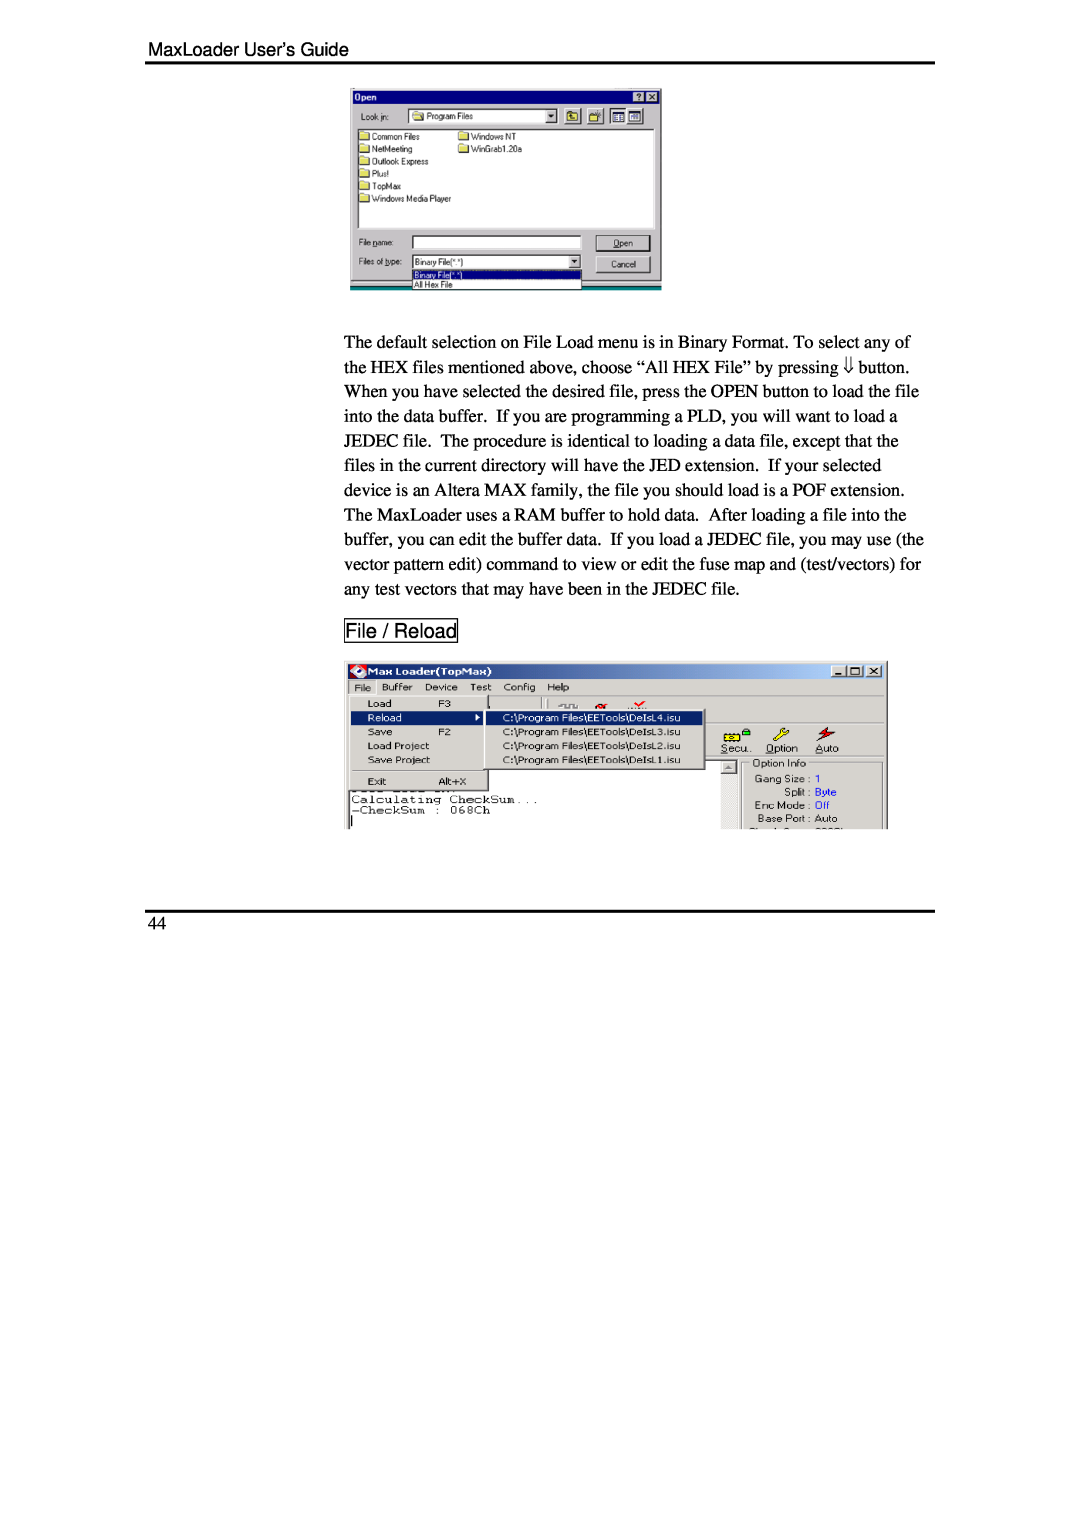 IBM MaxLoader manual File / Reload 